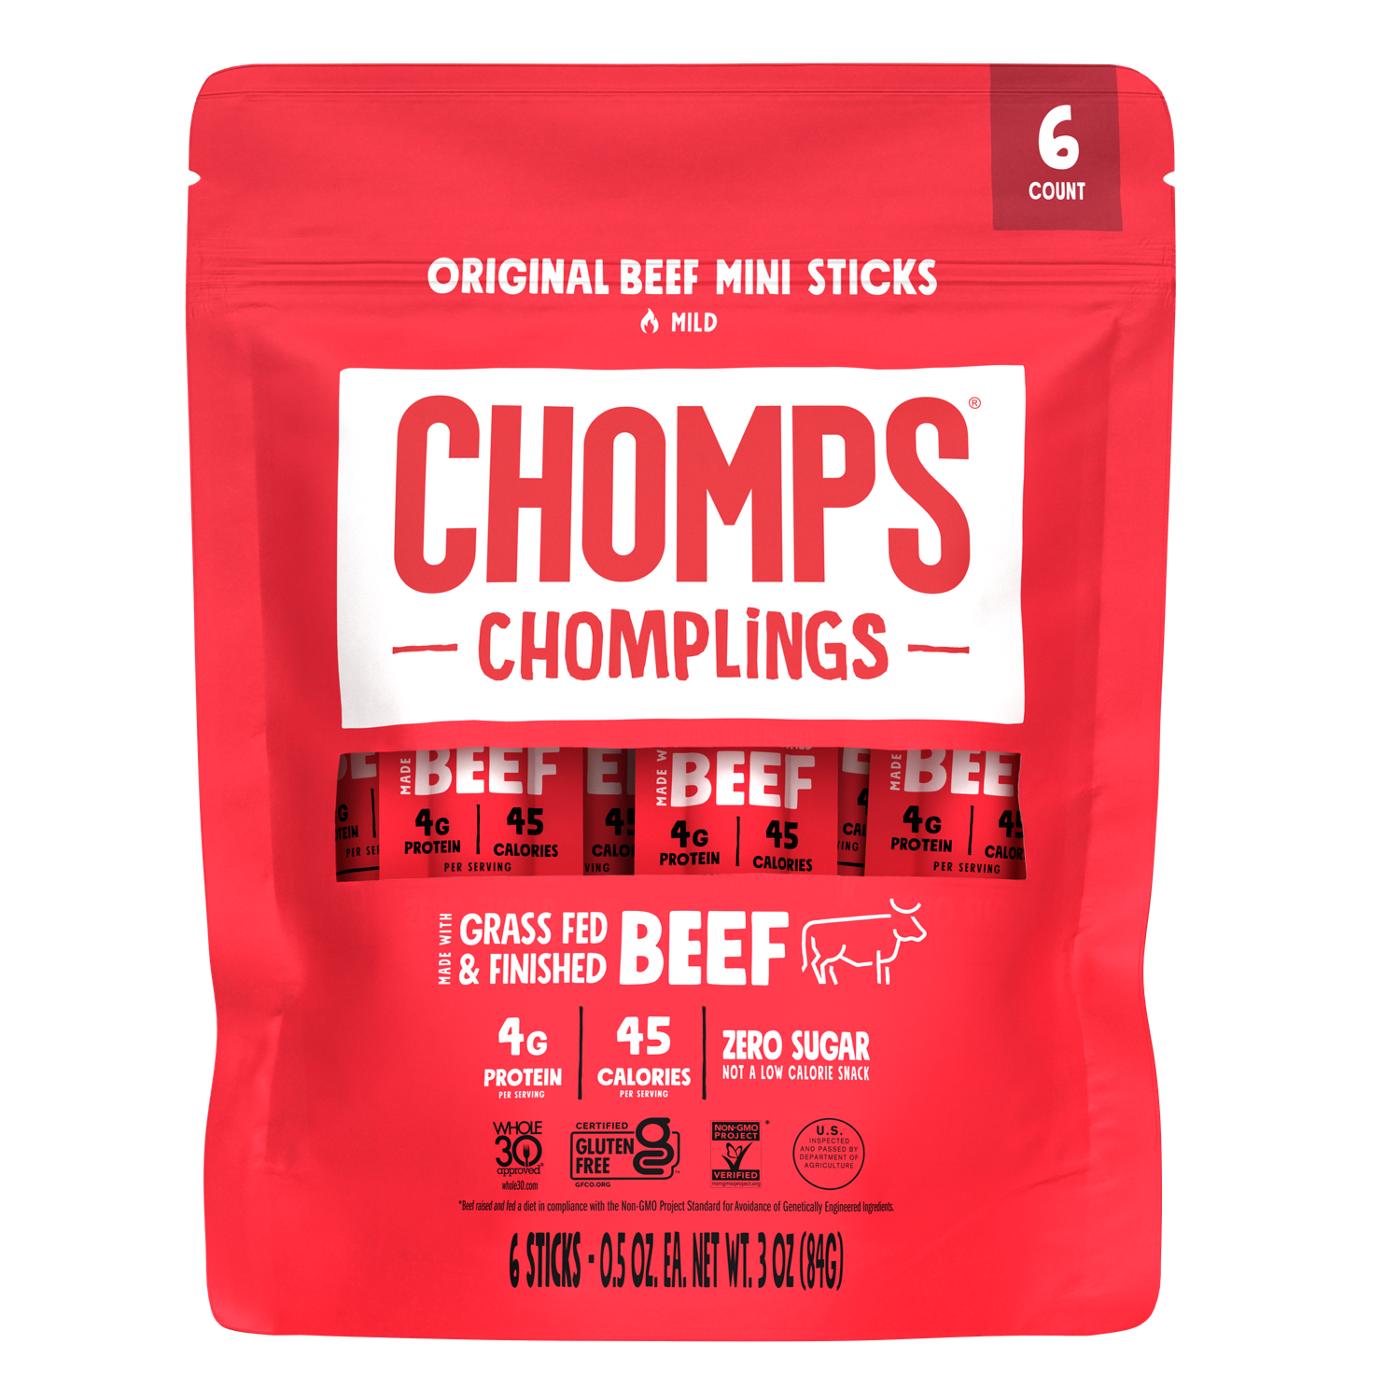 Chomps Chomplings Original Beef Mini Sticks - Shop Jerky at H-E-B